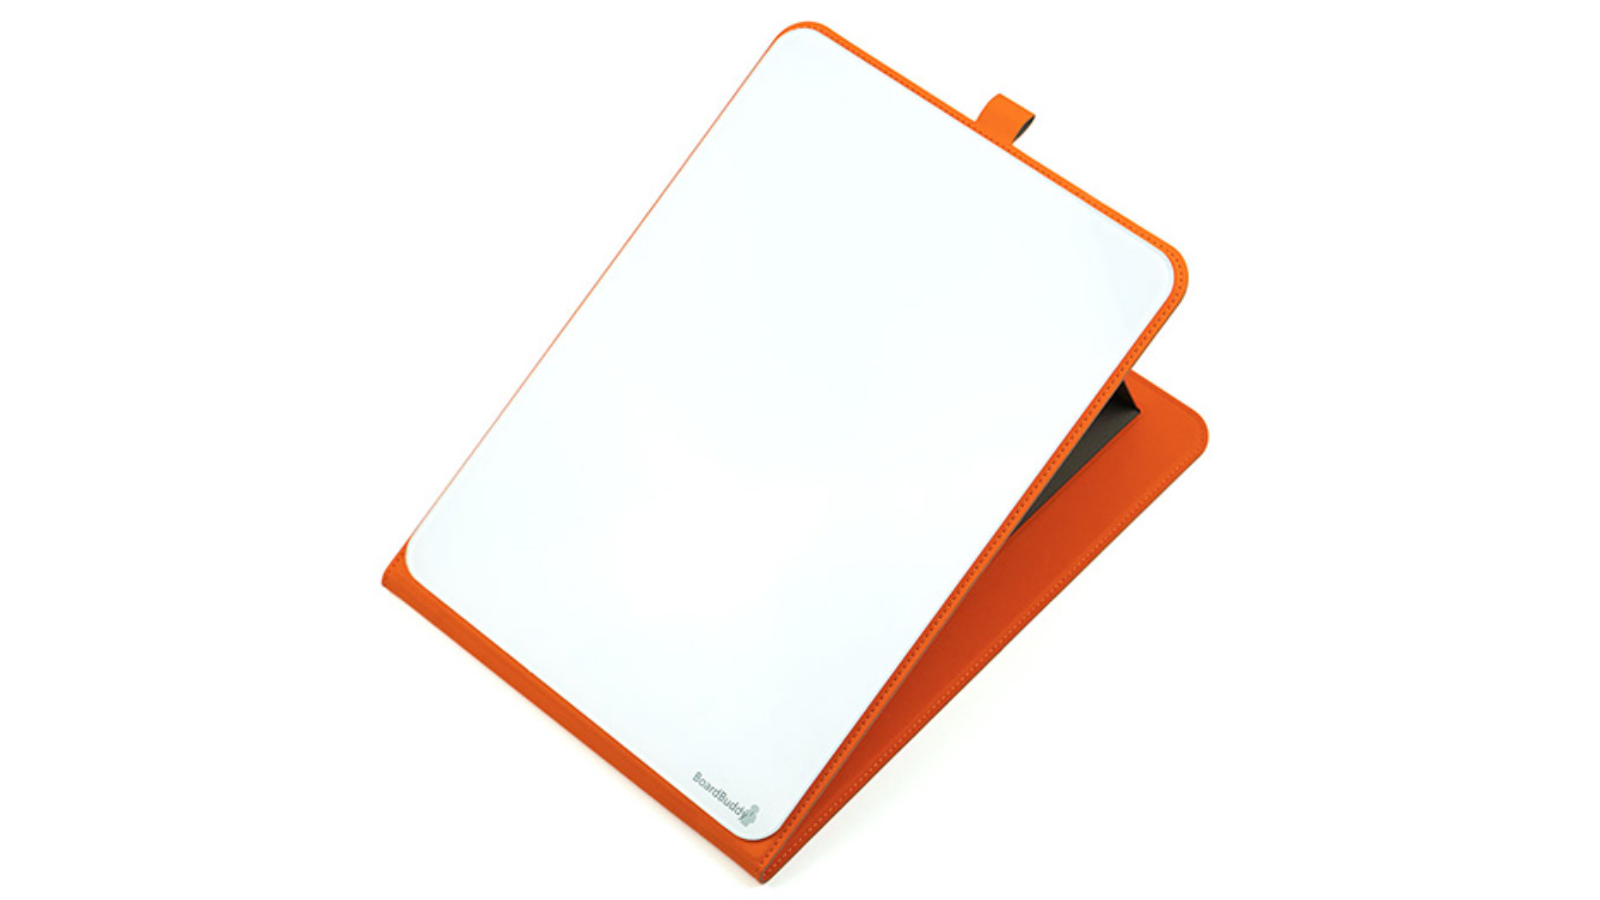 DeskBoard Buddy Portable: Portable Whiteboard